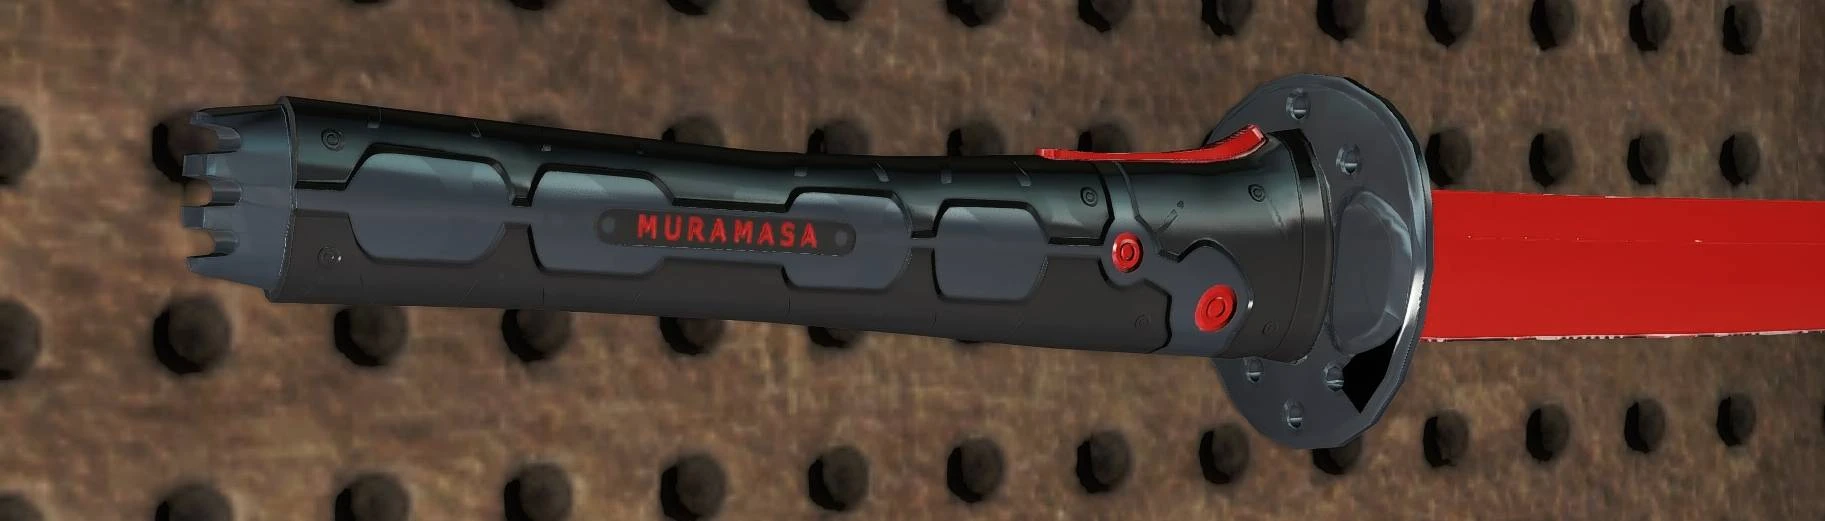 Steam Workshop::Murasama from Metal gear rising